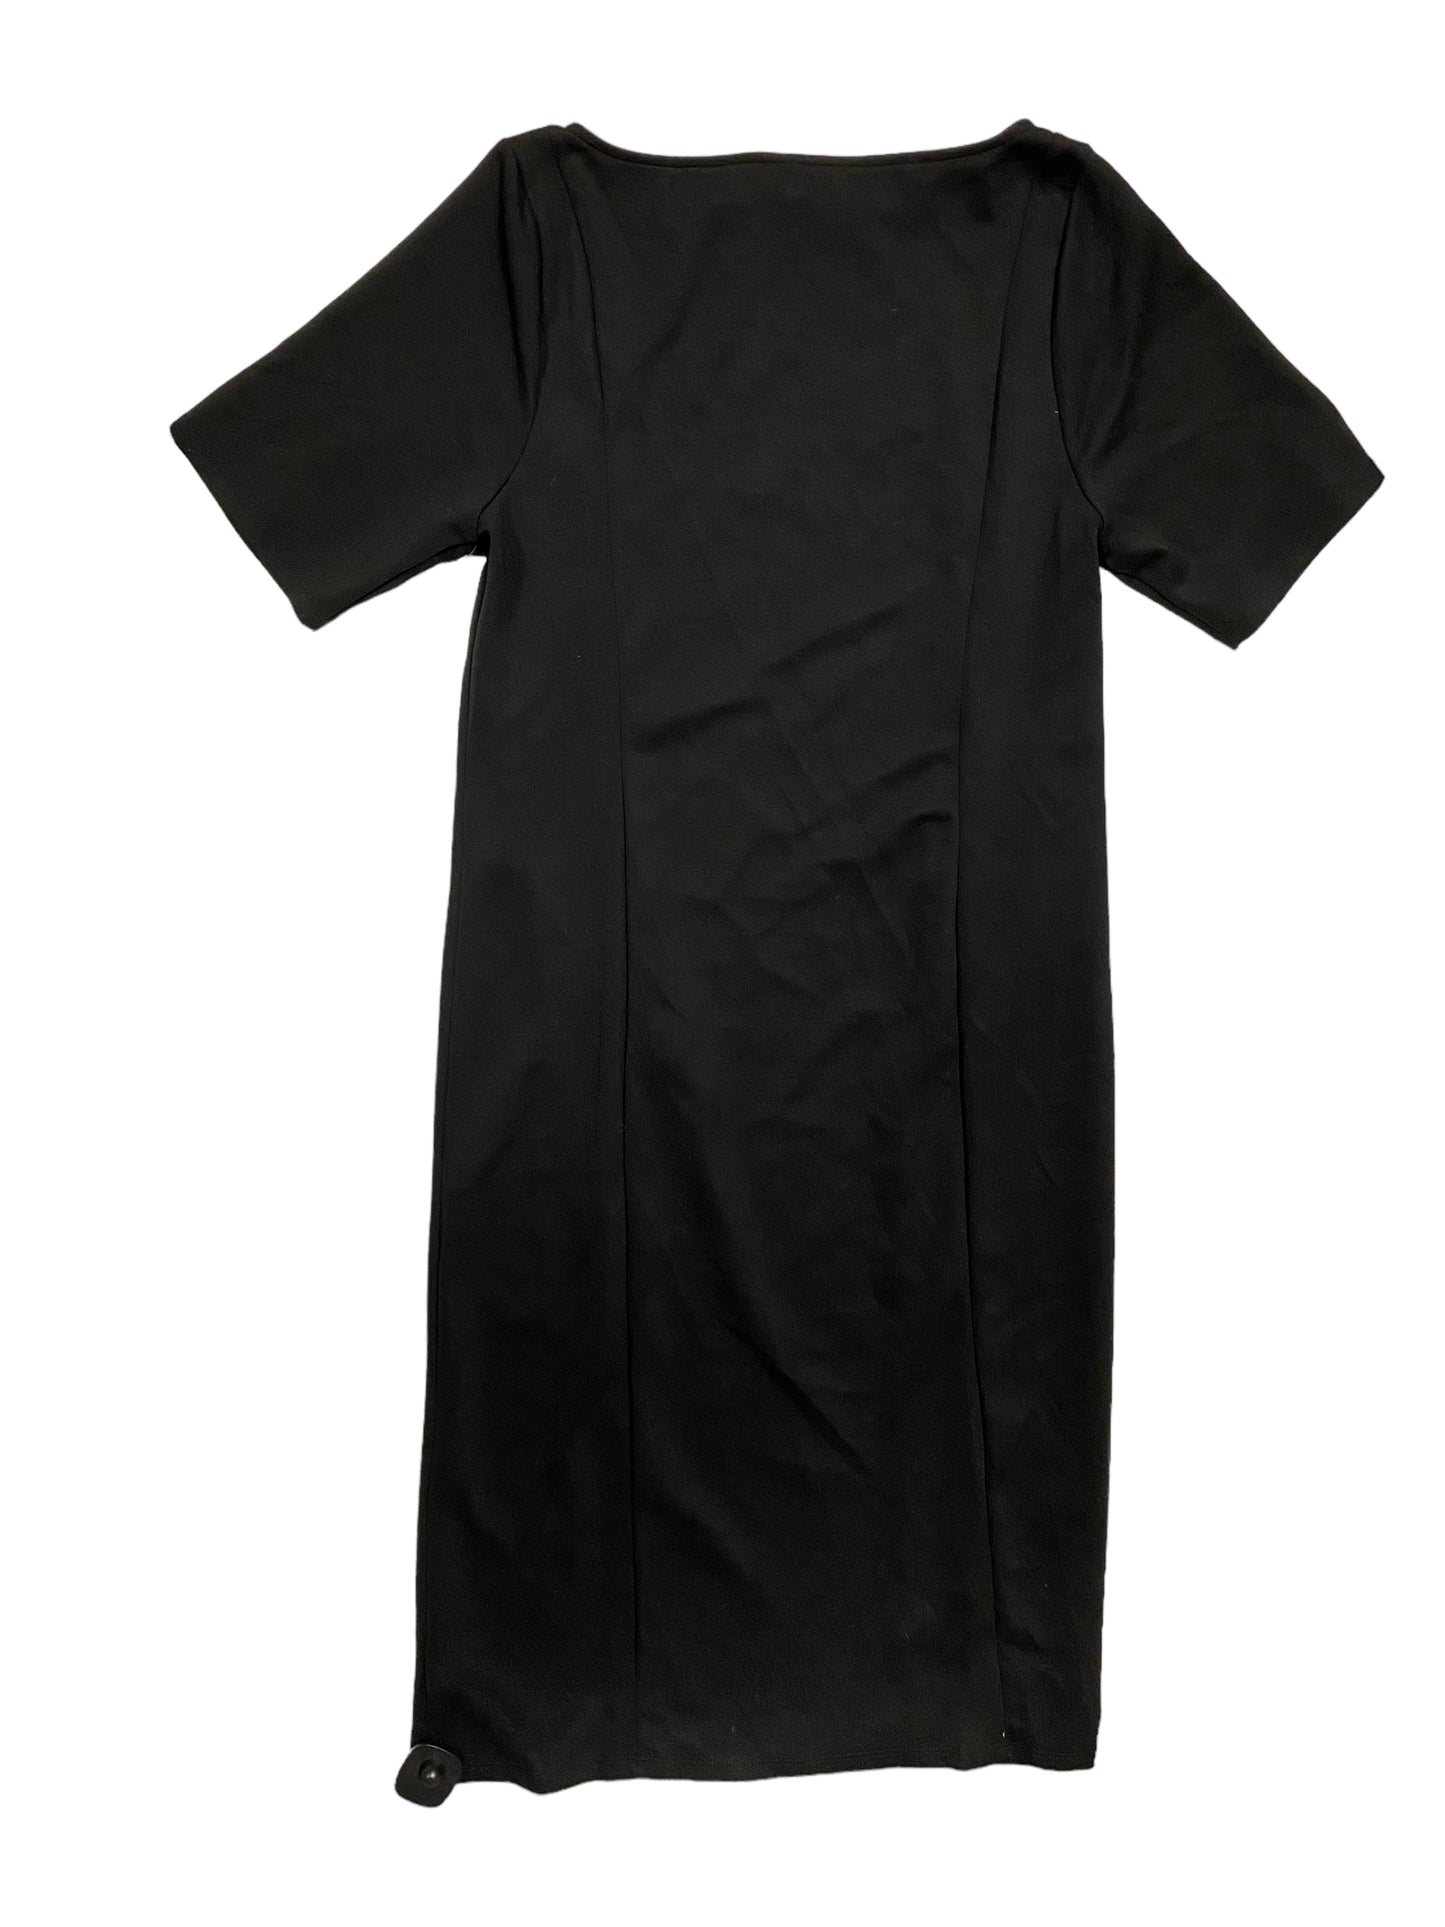 Black Dress Casual Midi Torrid, Size 16